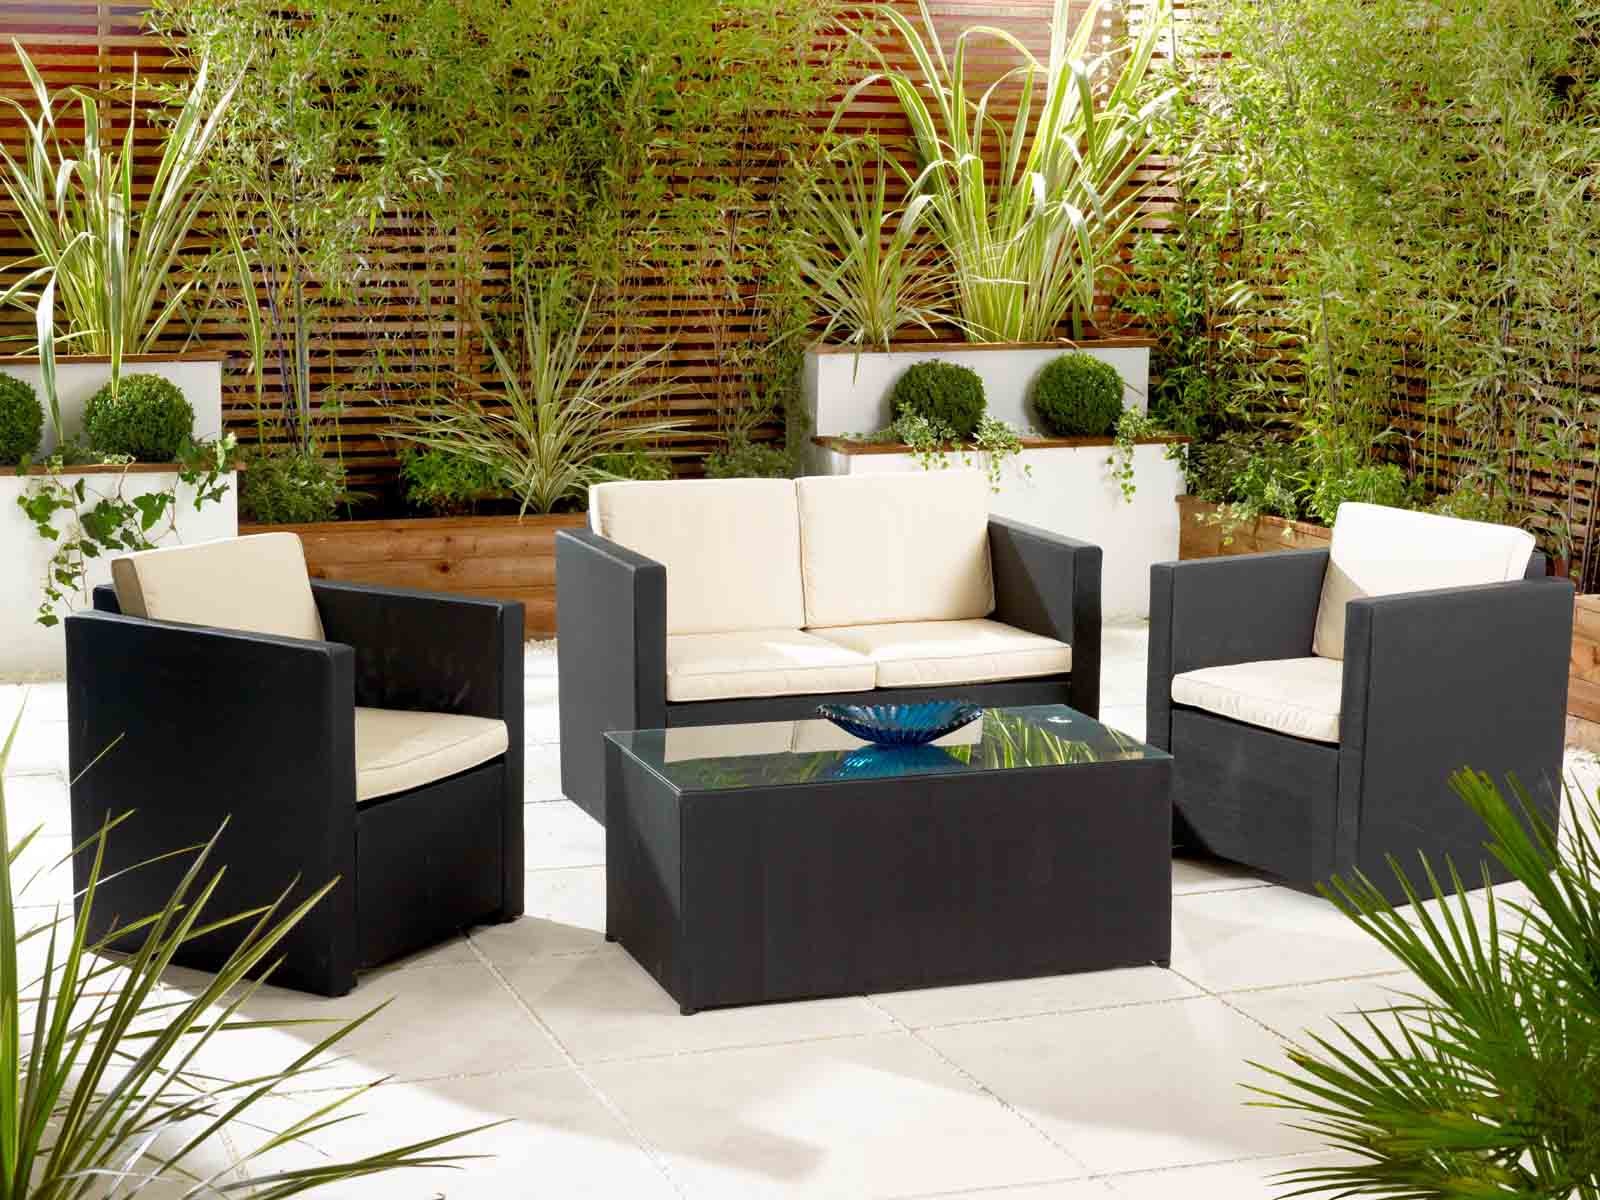 25 Stunning Garden Furniture Inspiration – The WoW Style